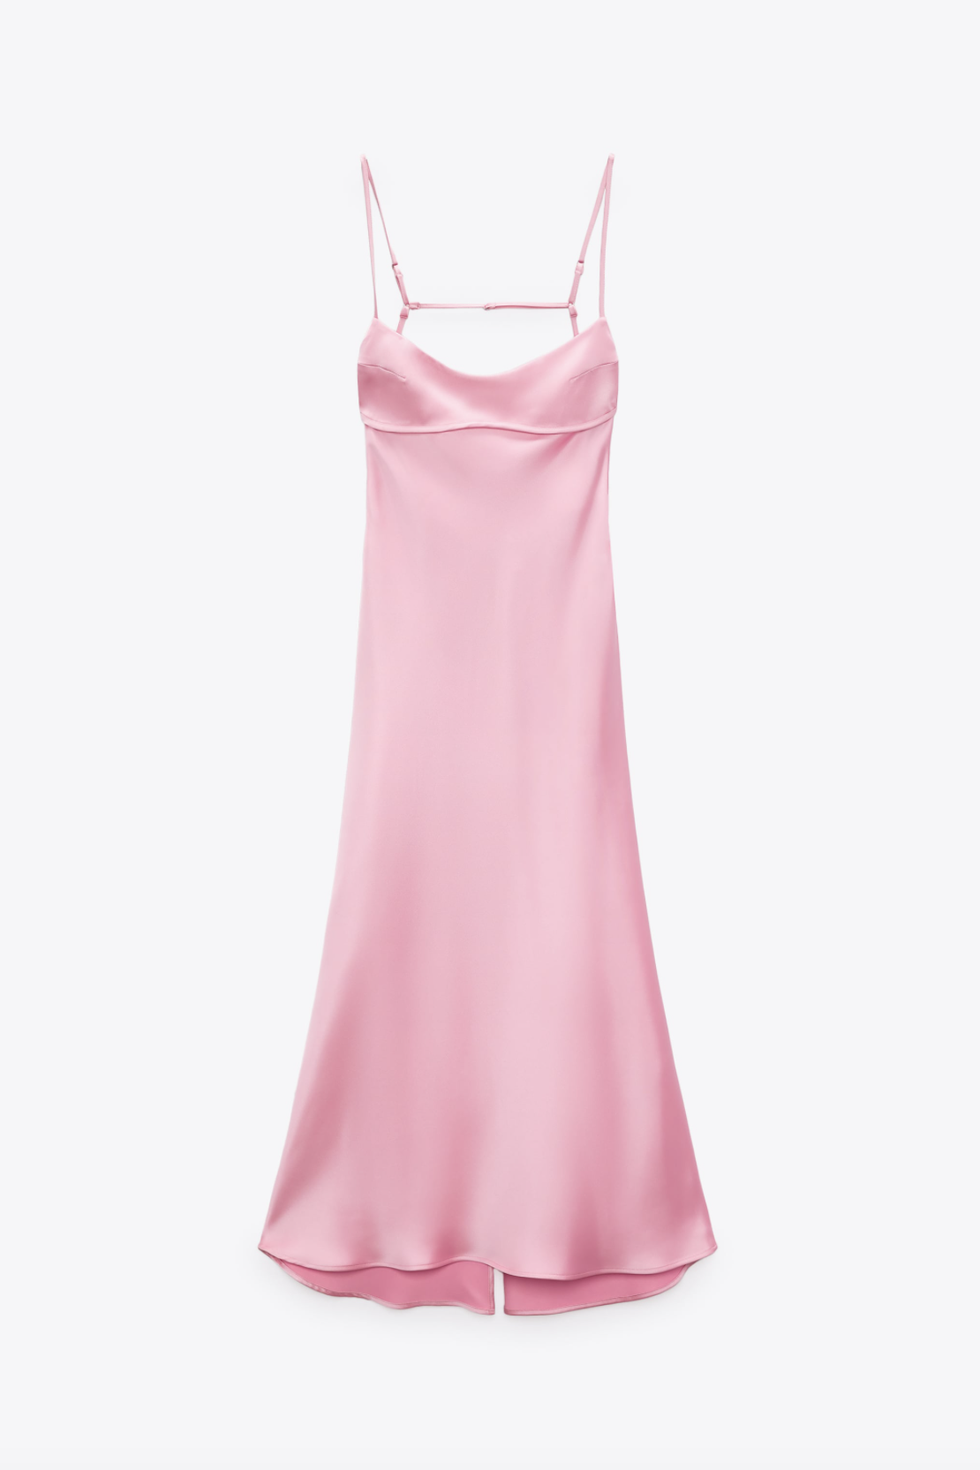 Zara Satin Effect Corset Style Dress Size Large